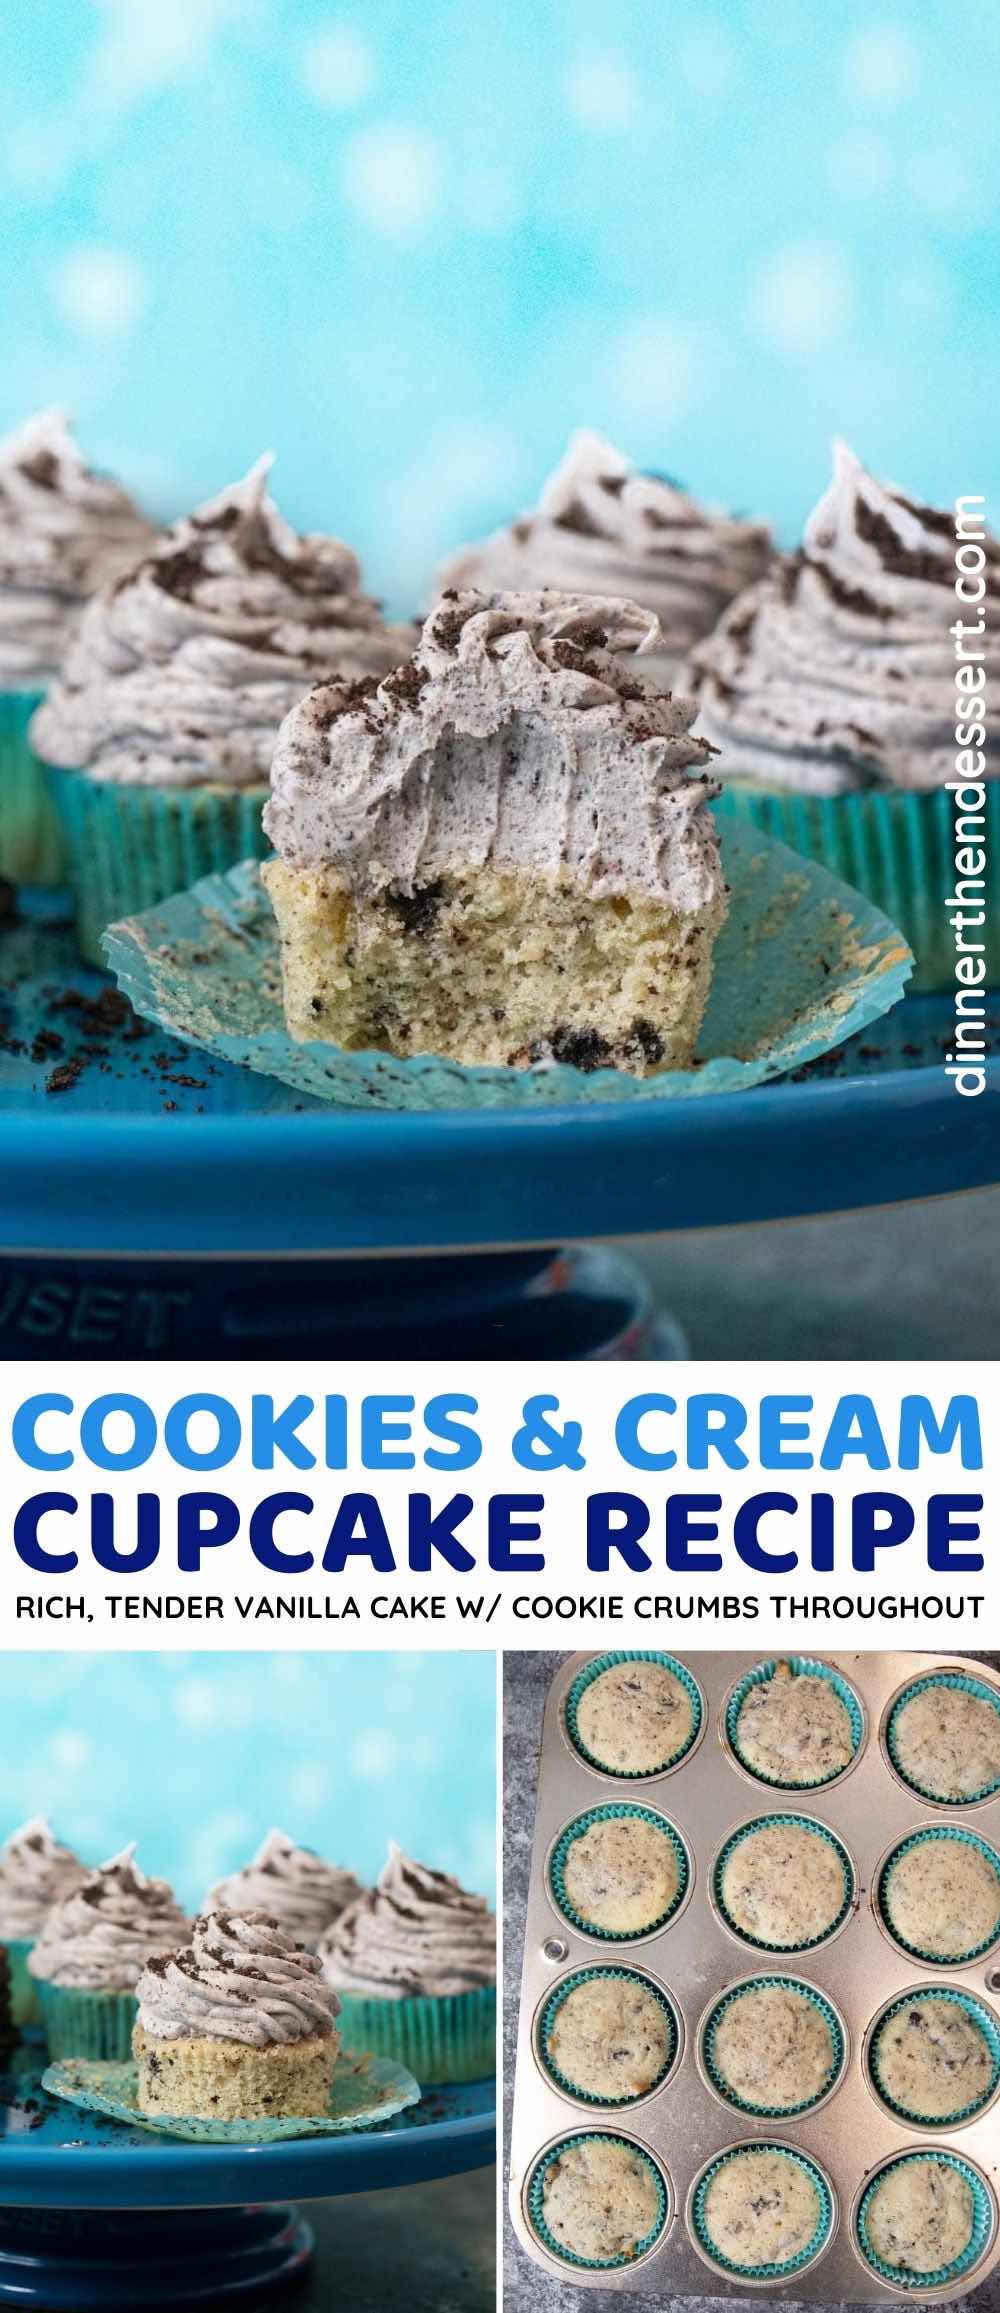 https://dinnerthendessert.com/wp-content/uploads/2021/04/Cookies-and-Cream-Cupcakes-L.jpg